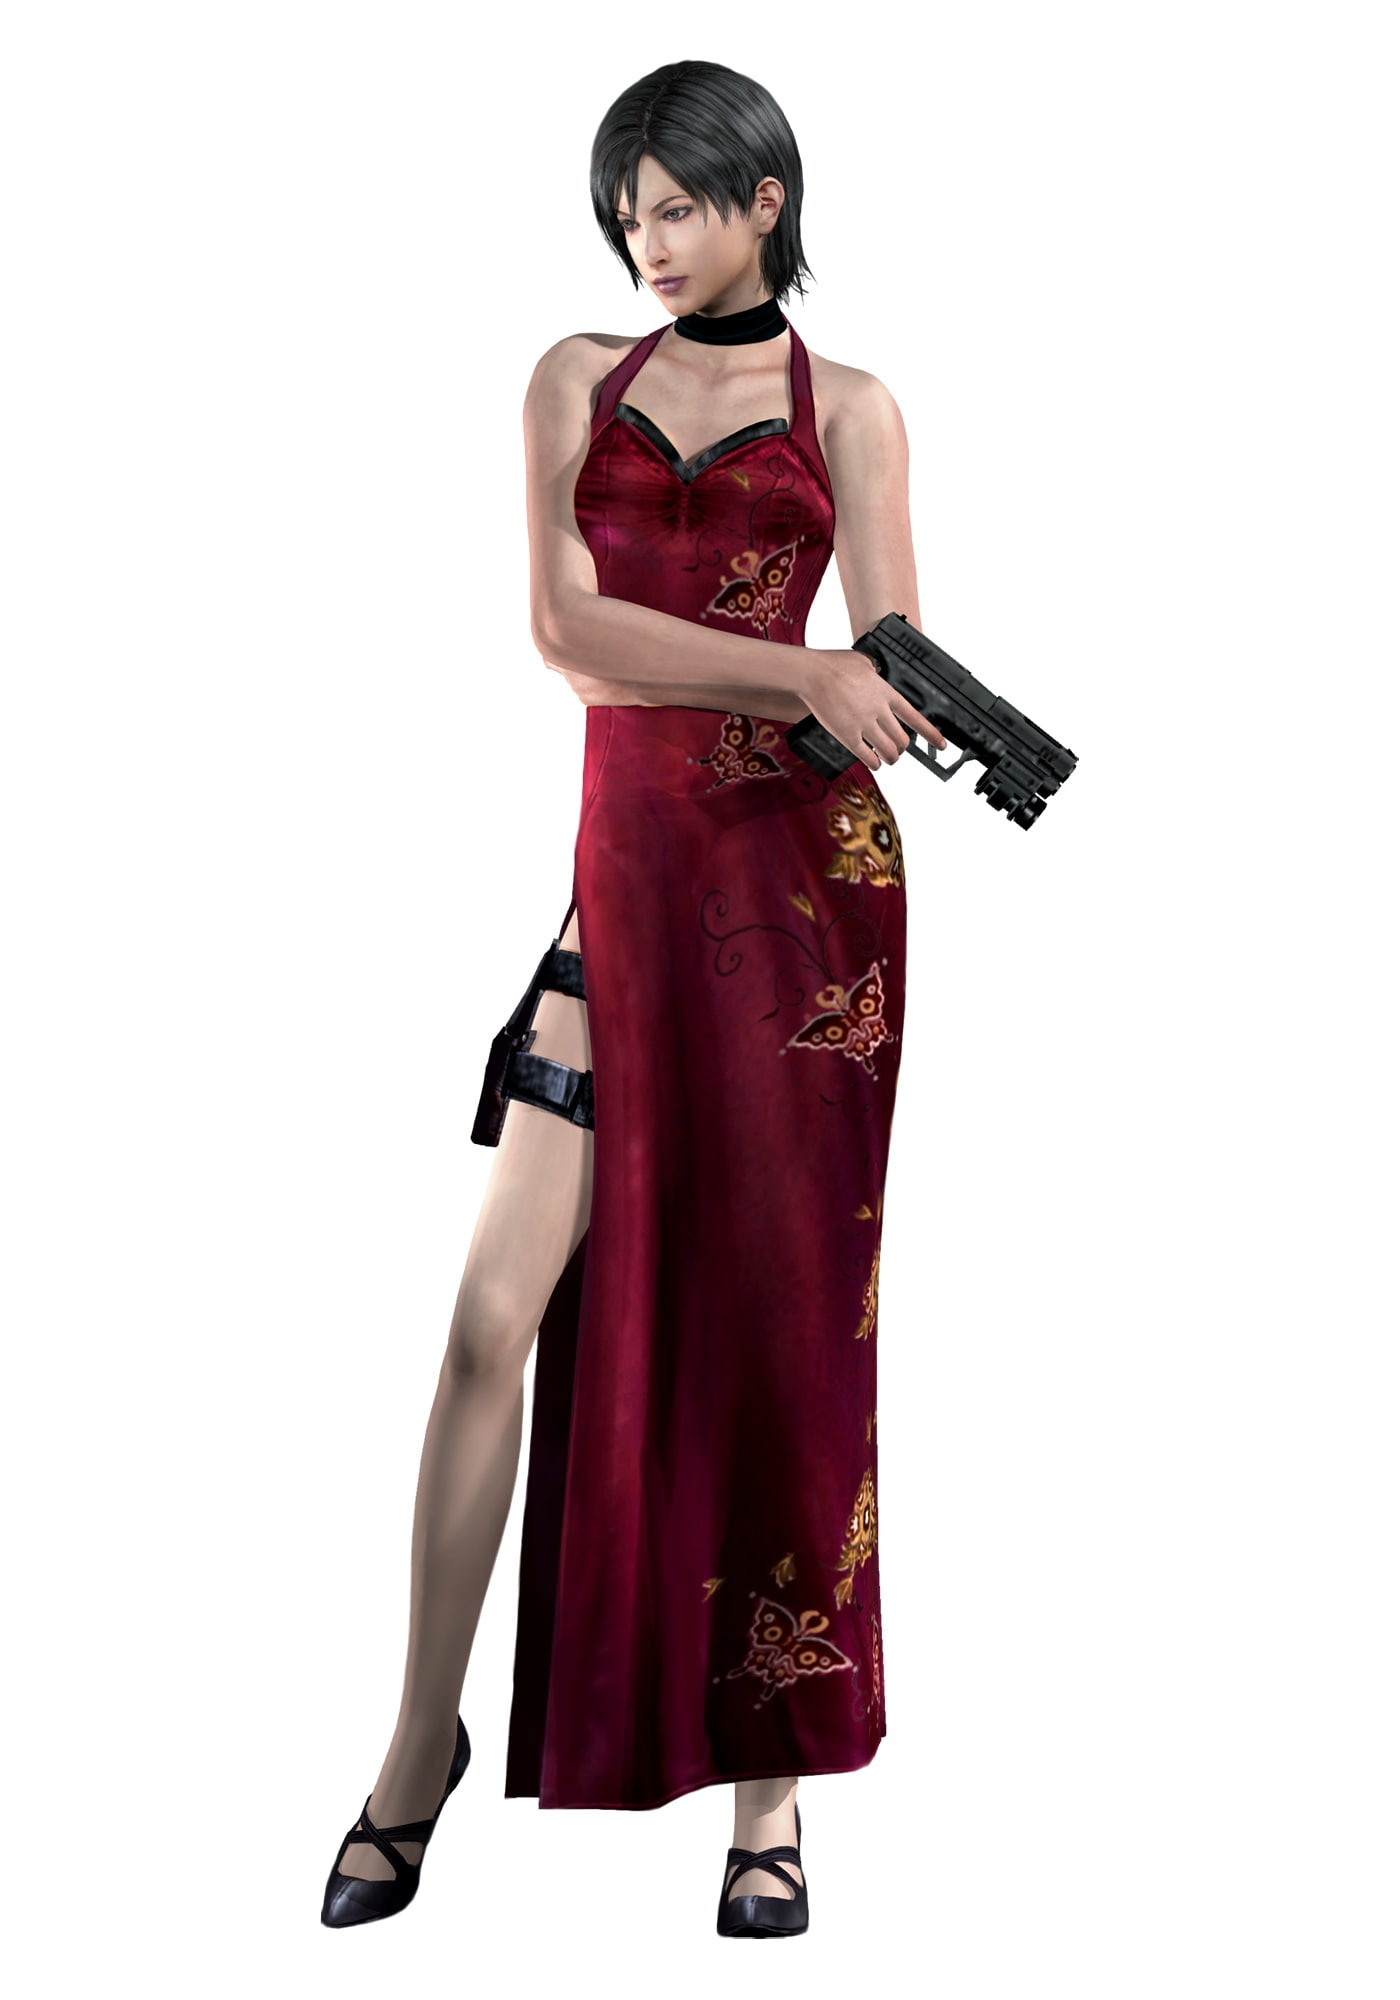 Free Download Hd Wallpaper Resident Evil Ada Wong 1400x2000 Video Games Resident Evil Hd Art 7738